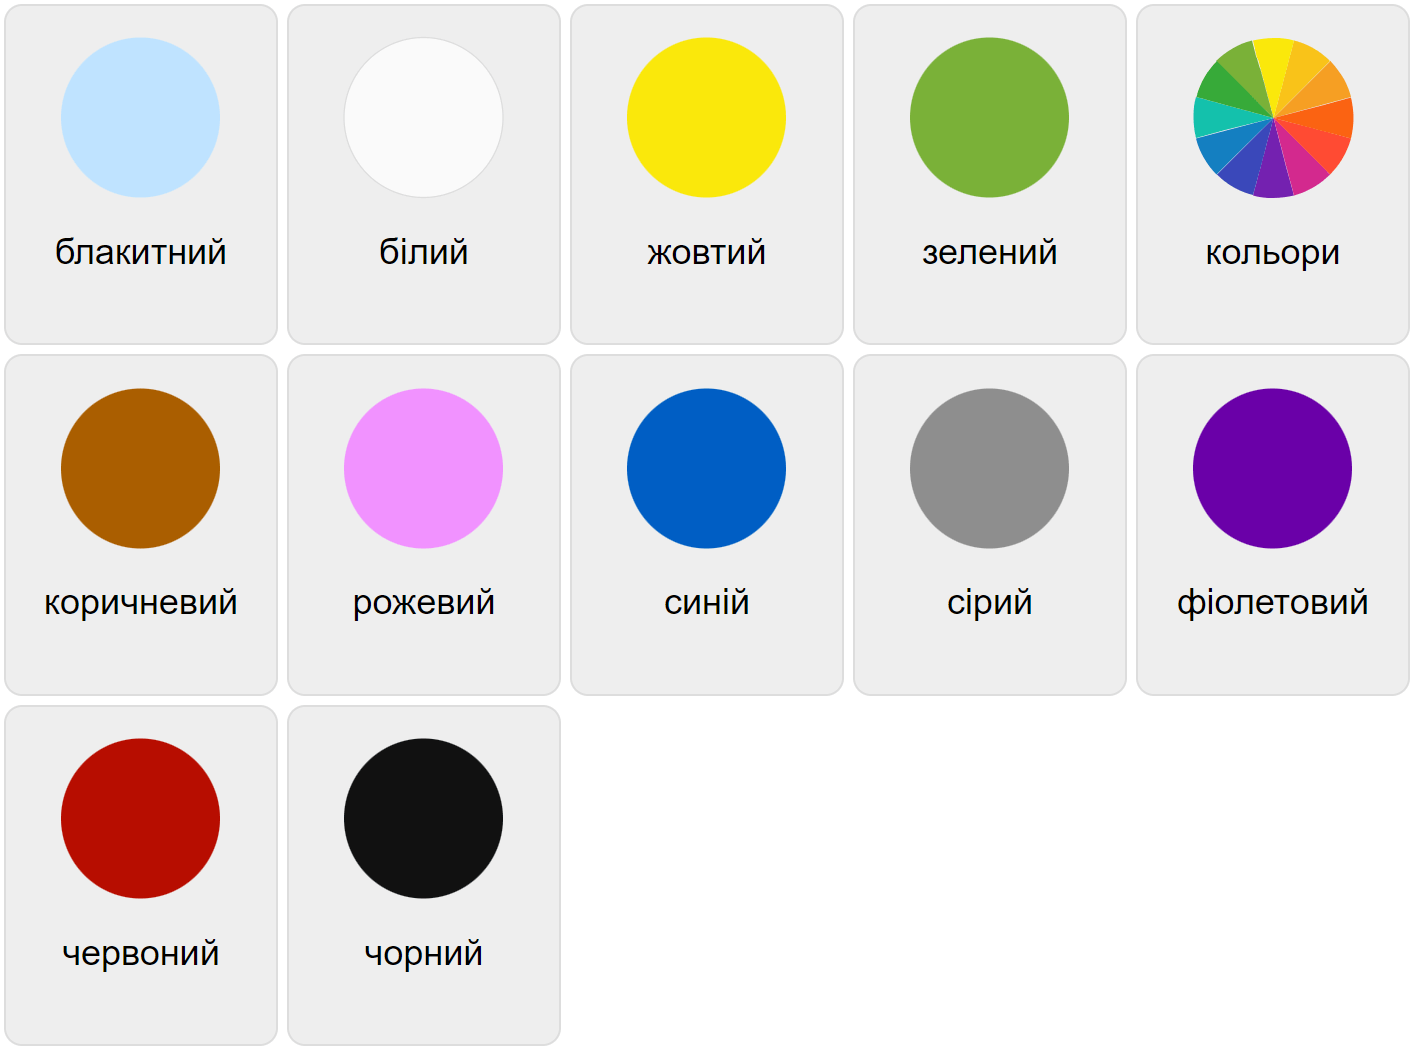 Colors in Ukrainian